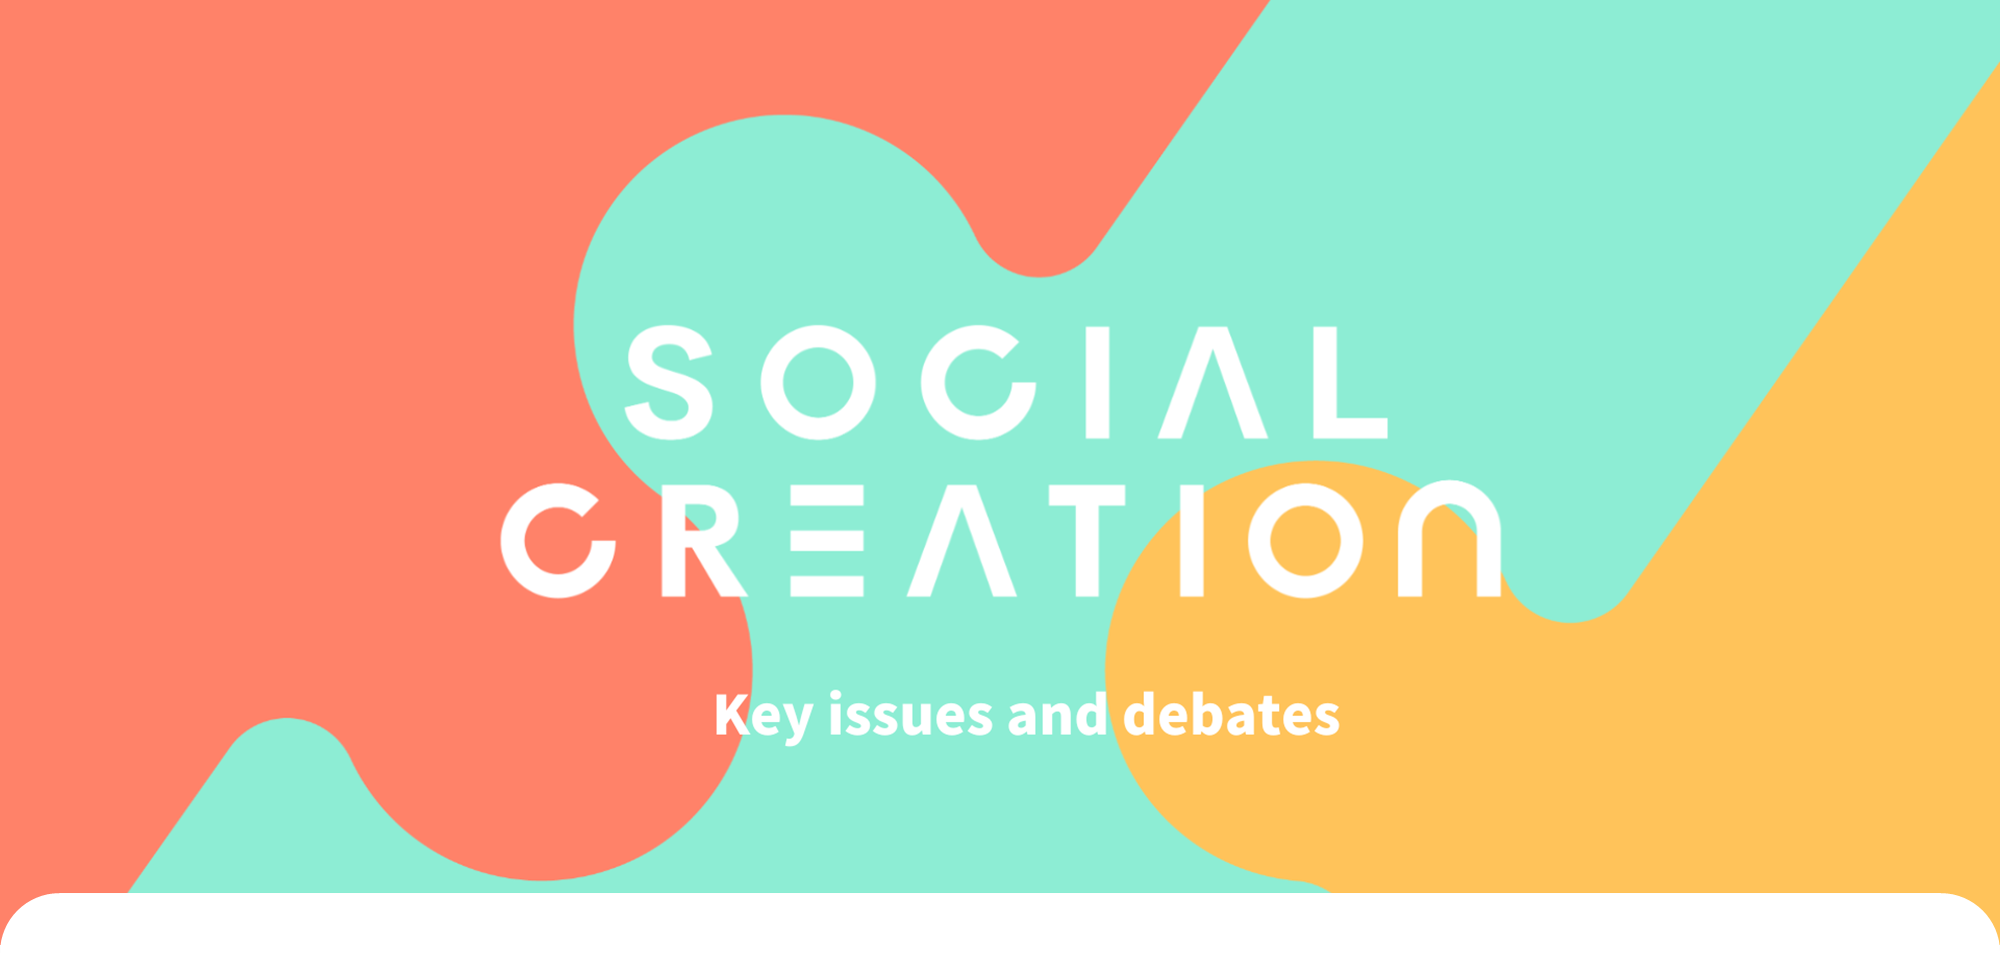 Social Creation Key issues and debates